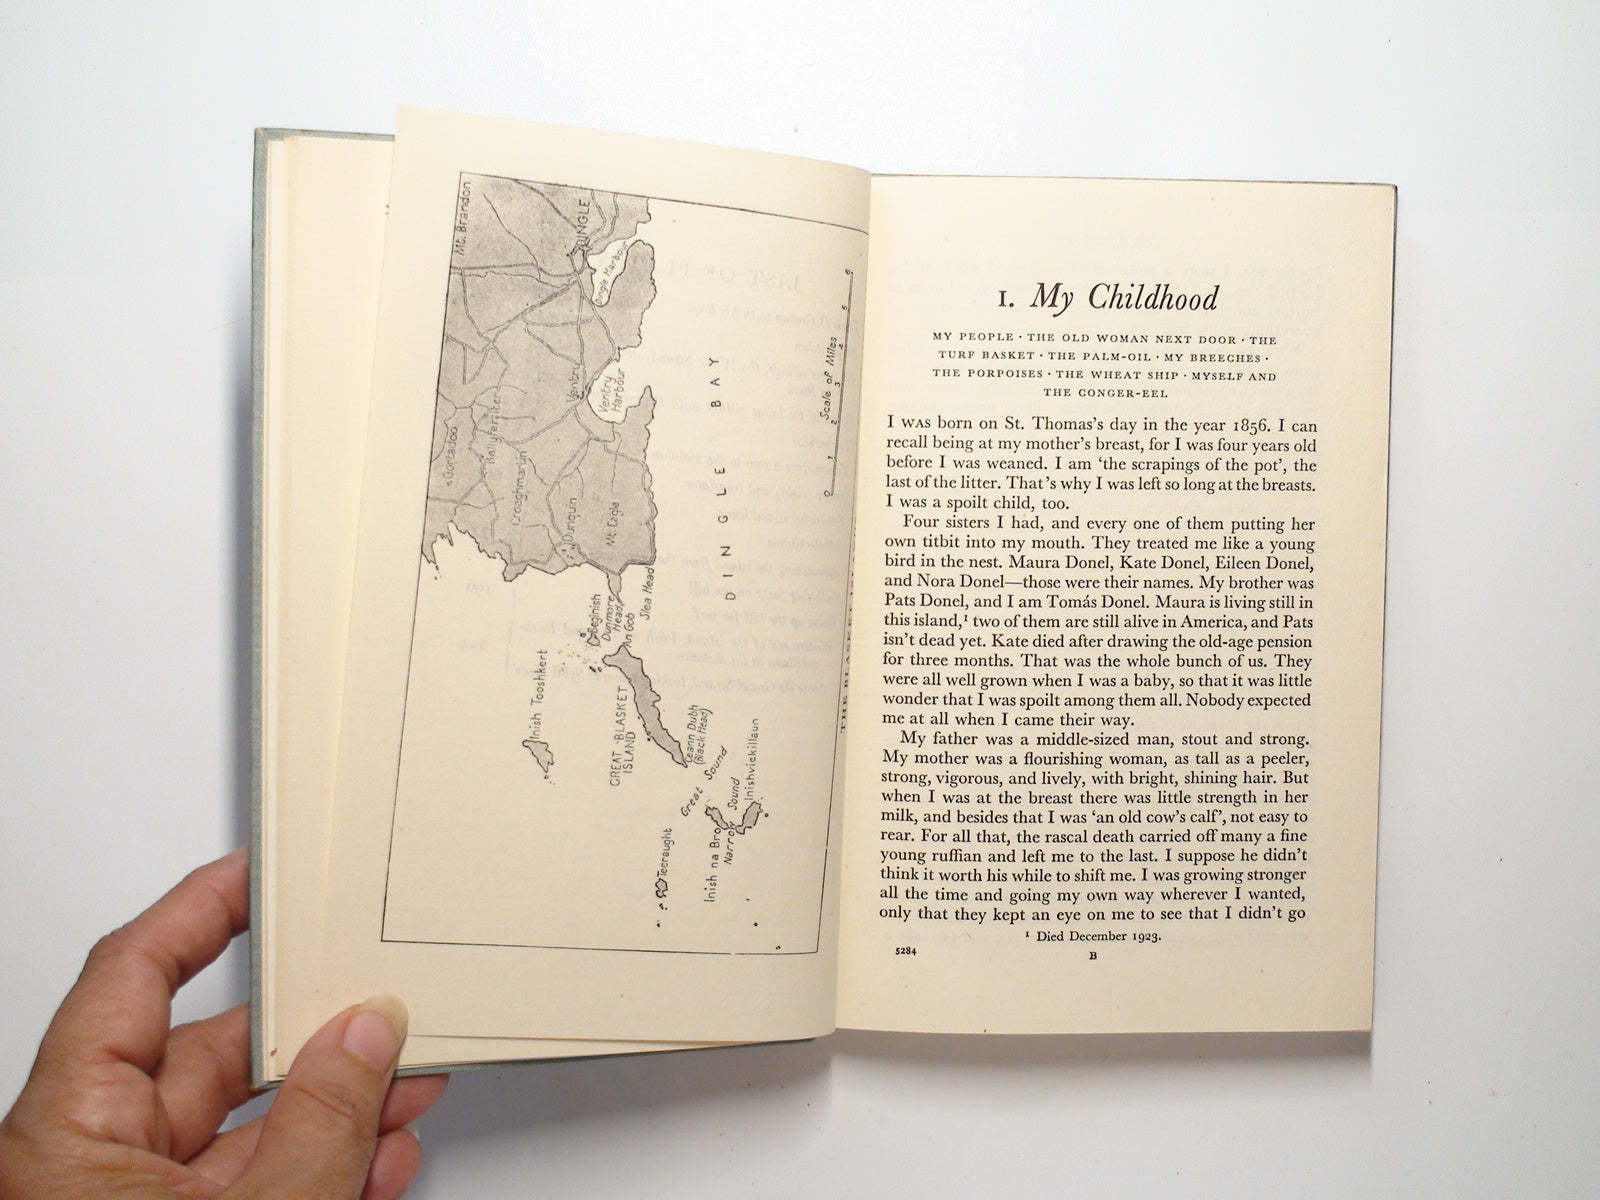 The Islandman, Thomas O Crohan, Translated from the Irish by Robin Flower, 1951